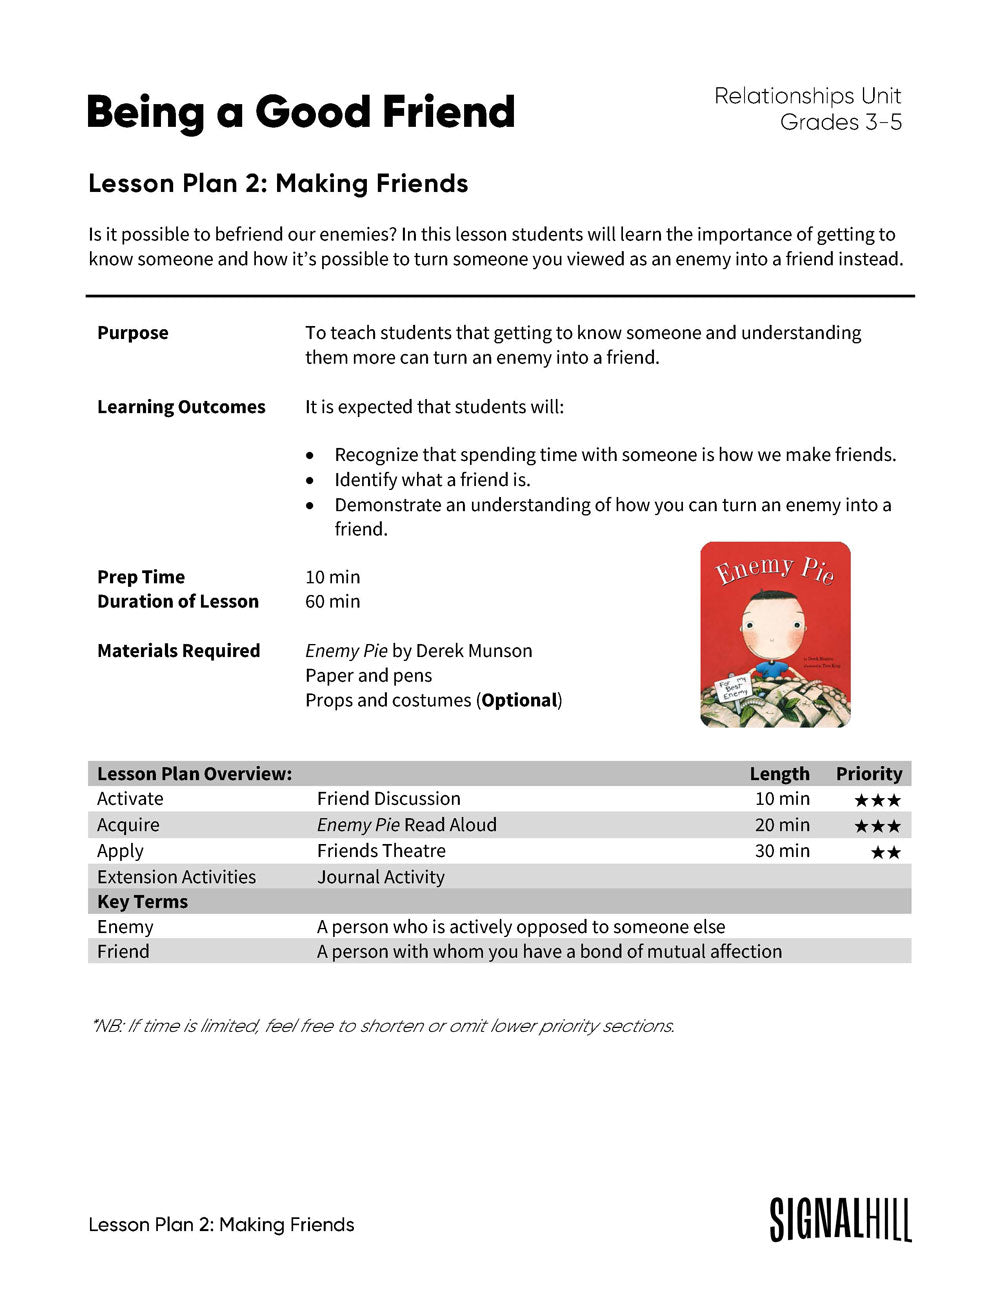 Lesson Plan 2: Making Friends